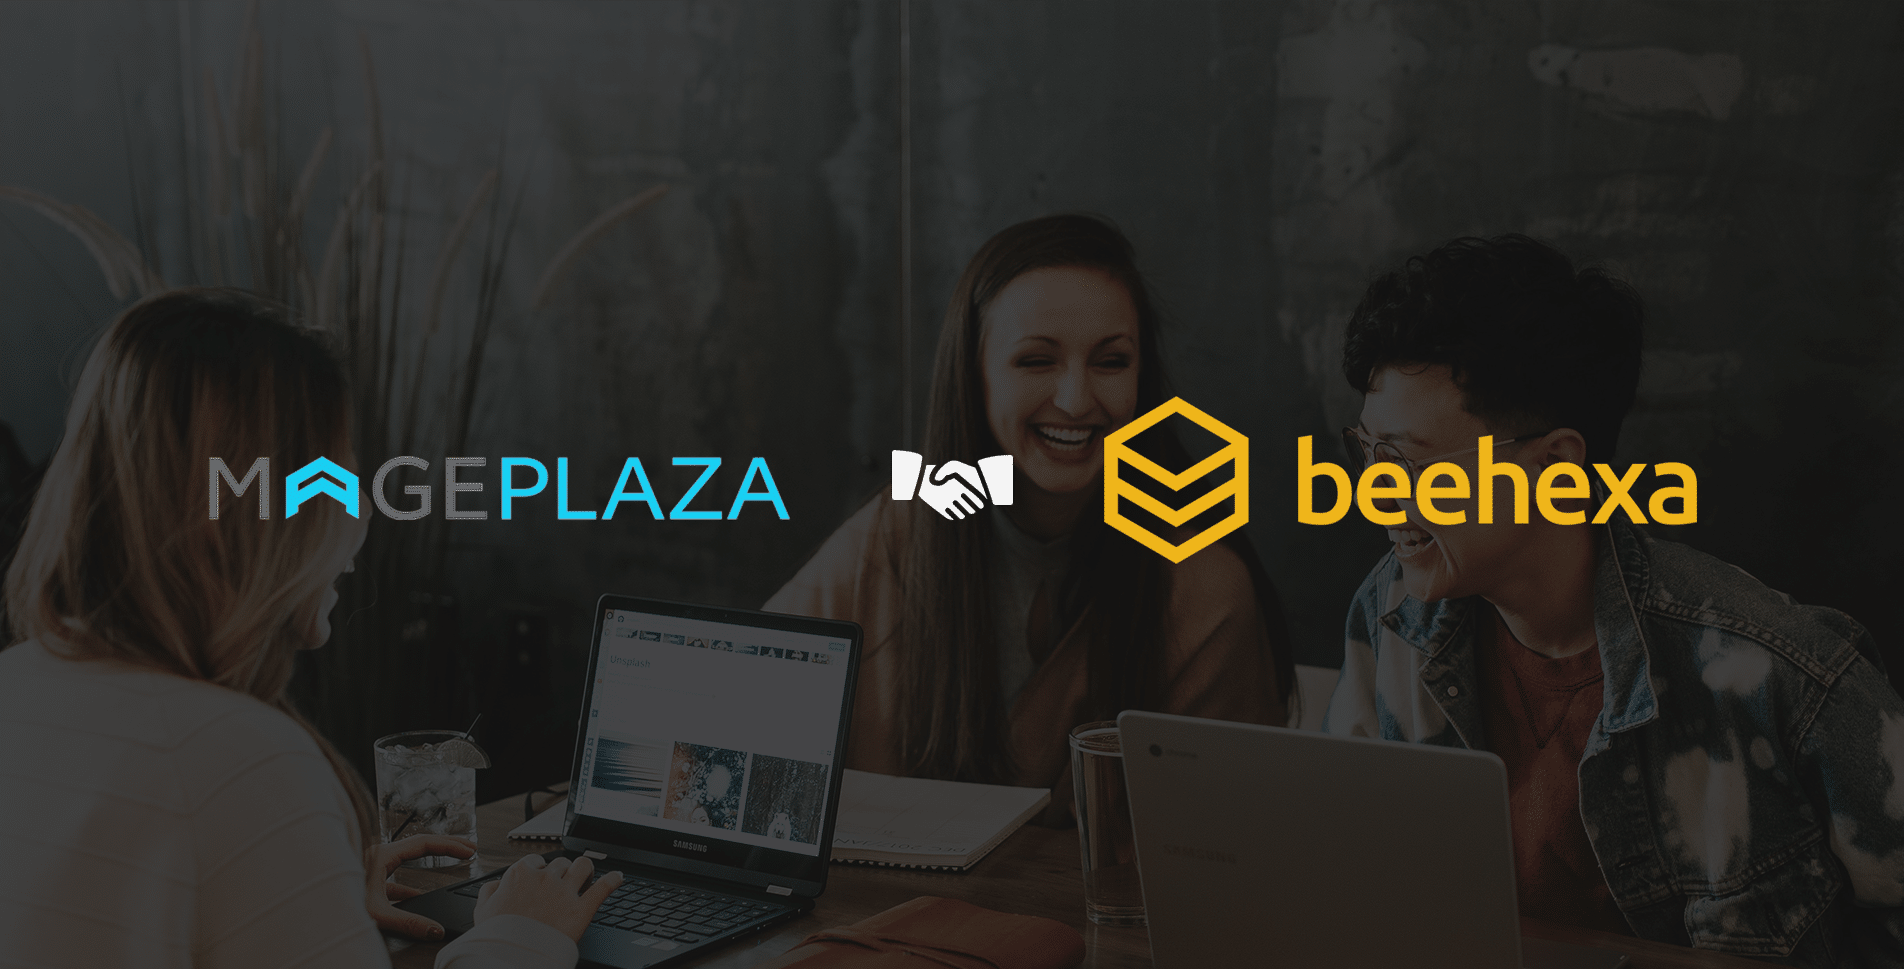 MagePlaza and Beehexa Partnership